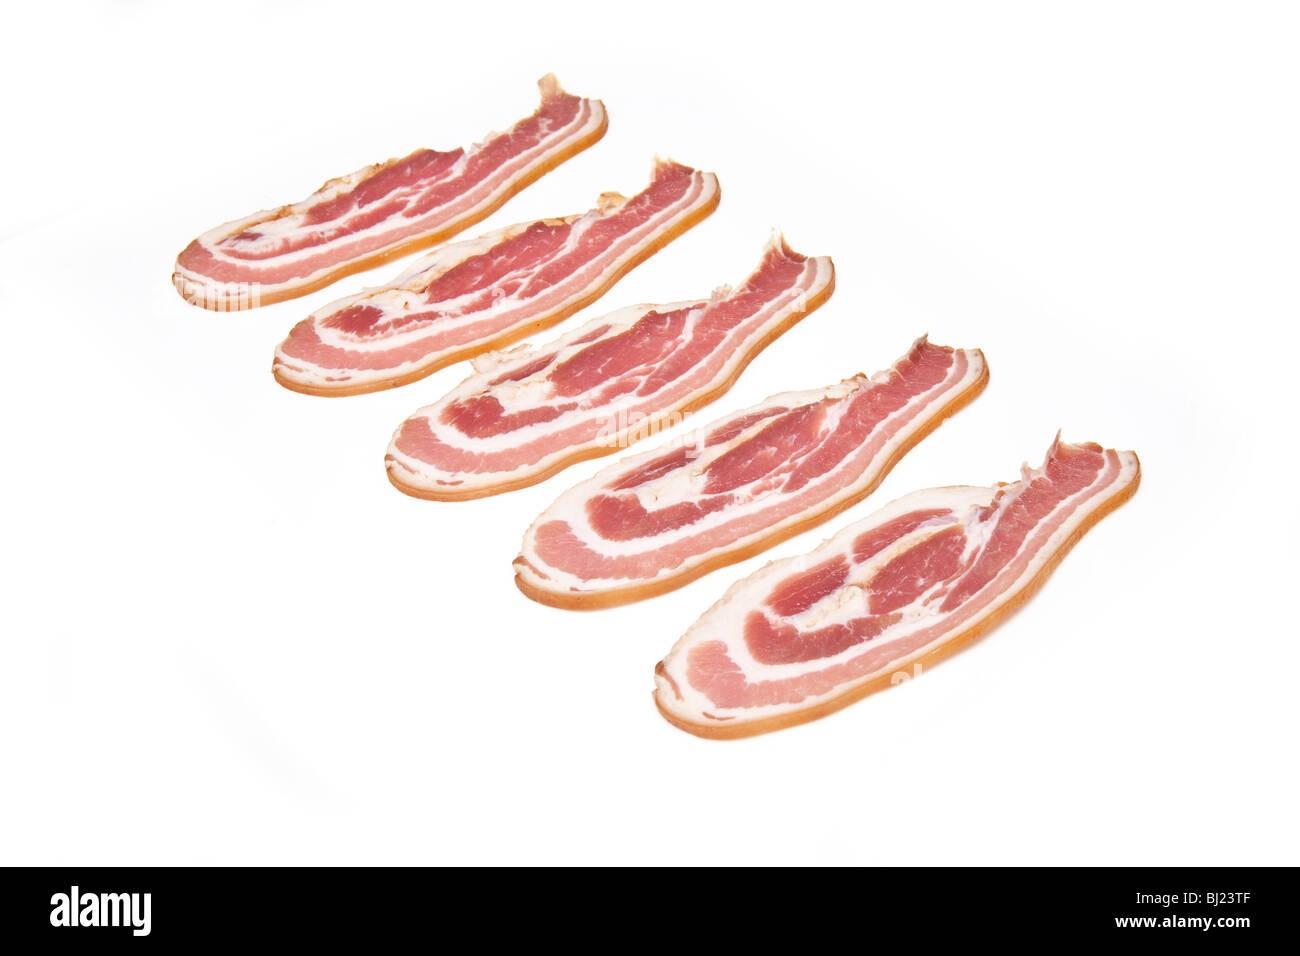 Streaky bacon rashers isolated on a white studio background Stock Photo